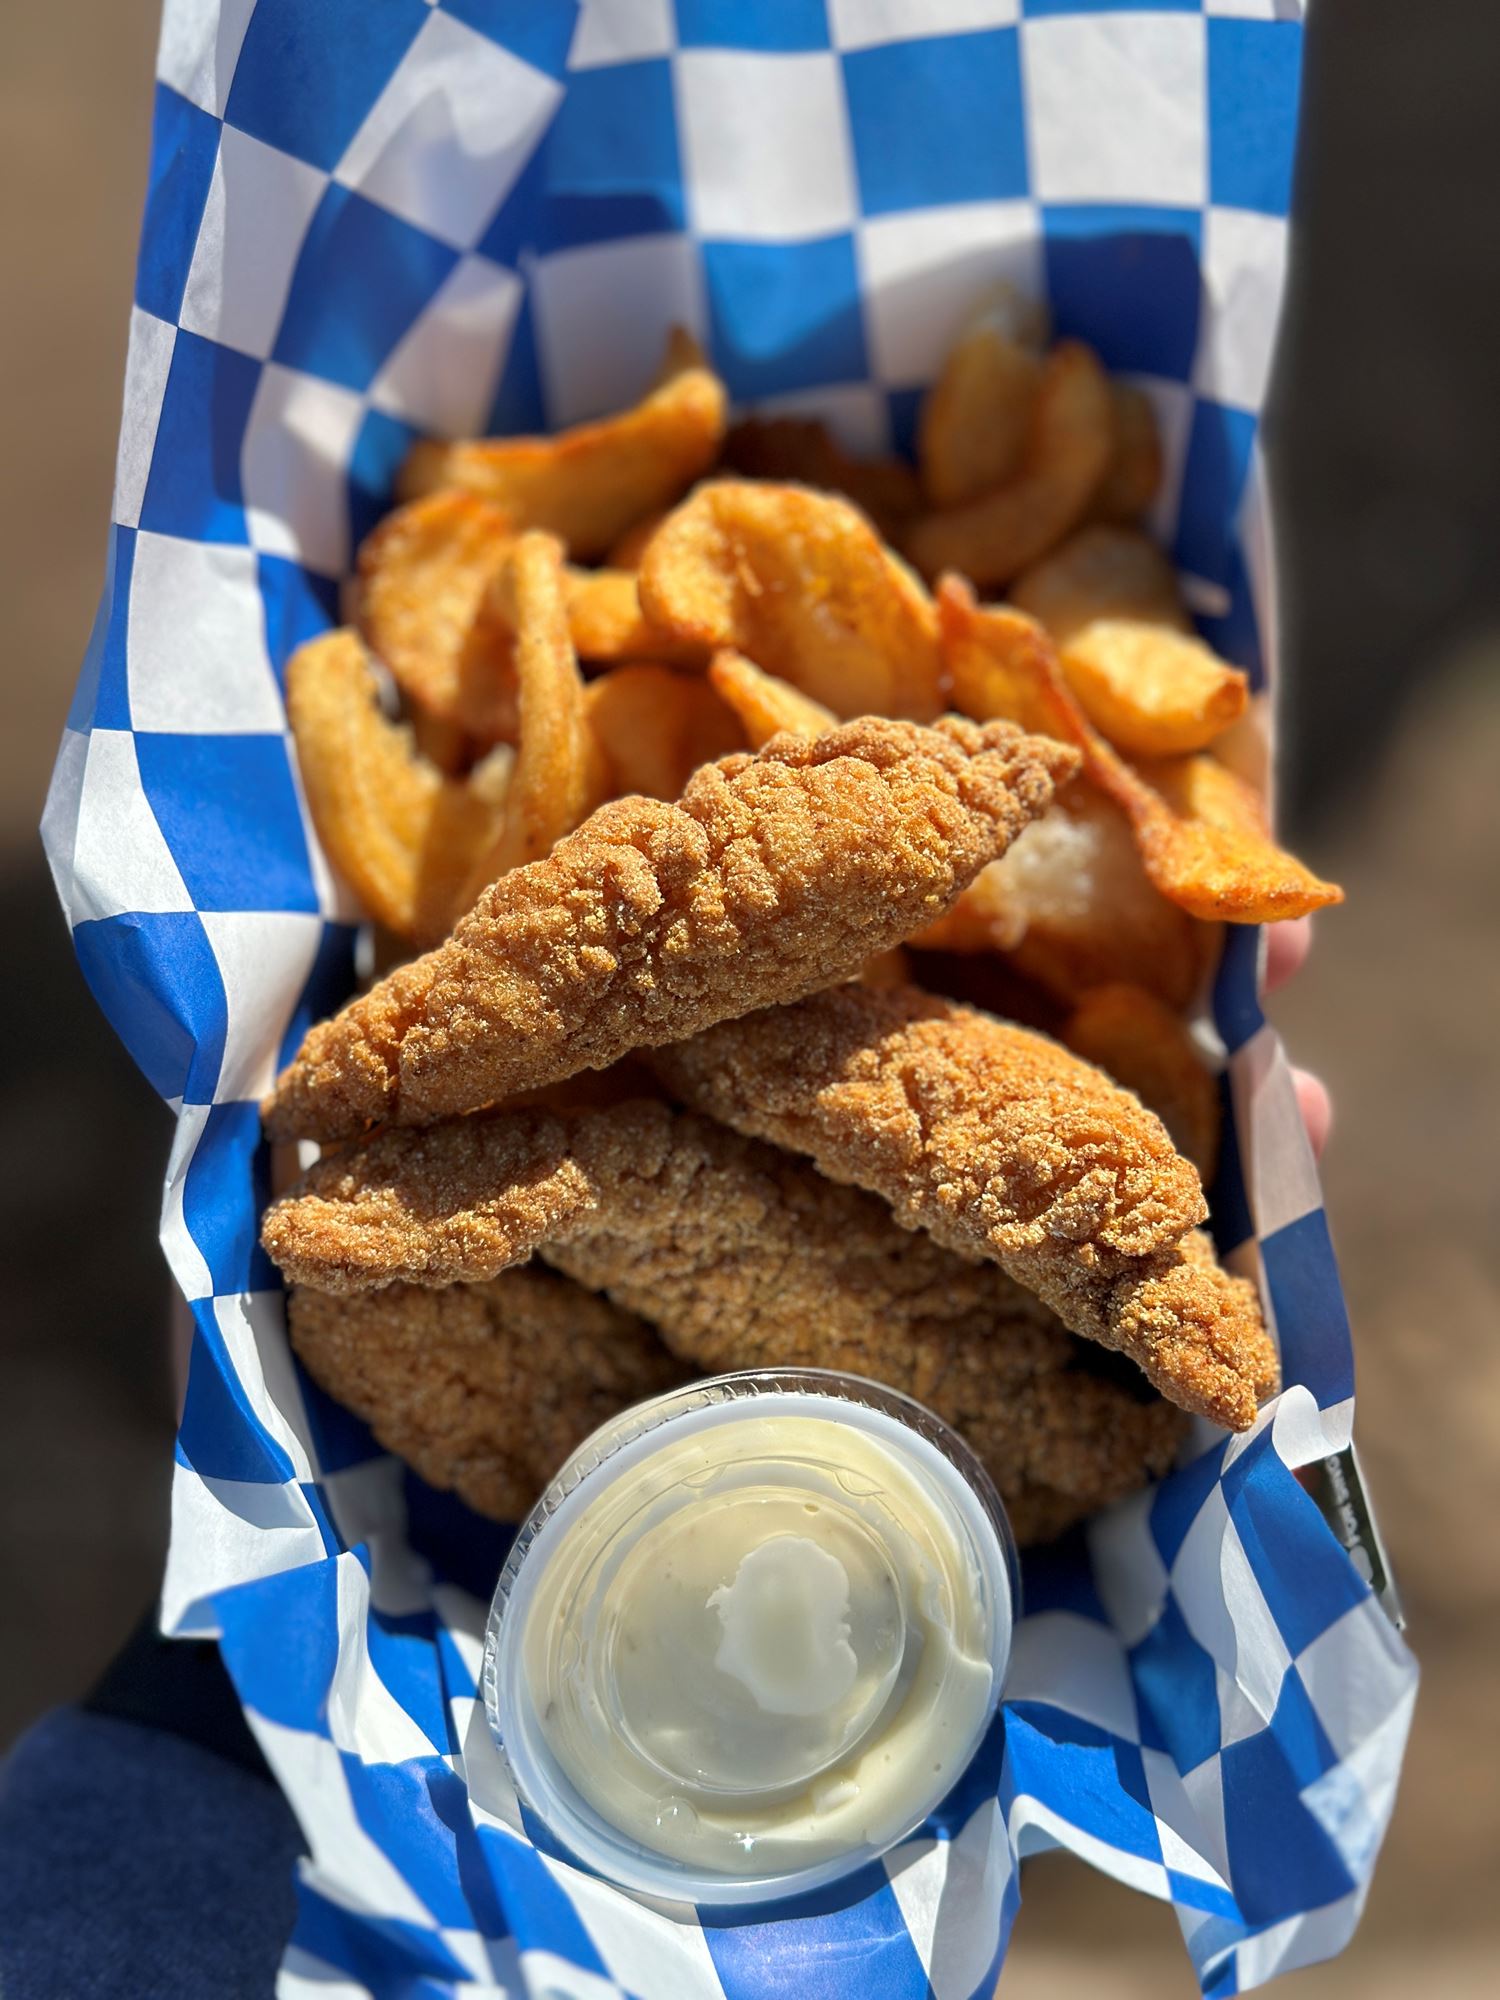 Flounder's Fish & Chips